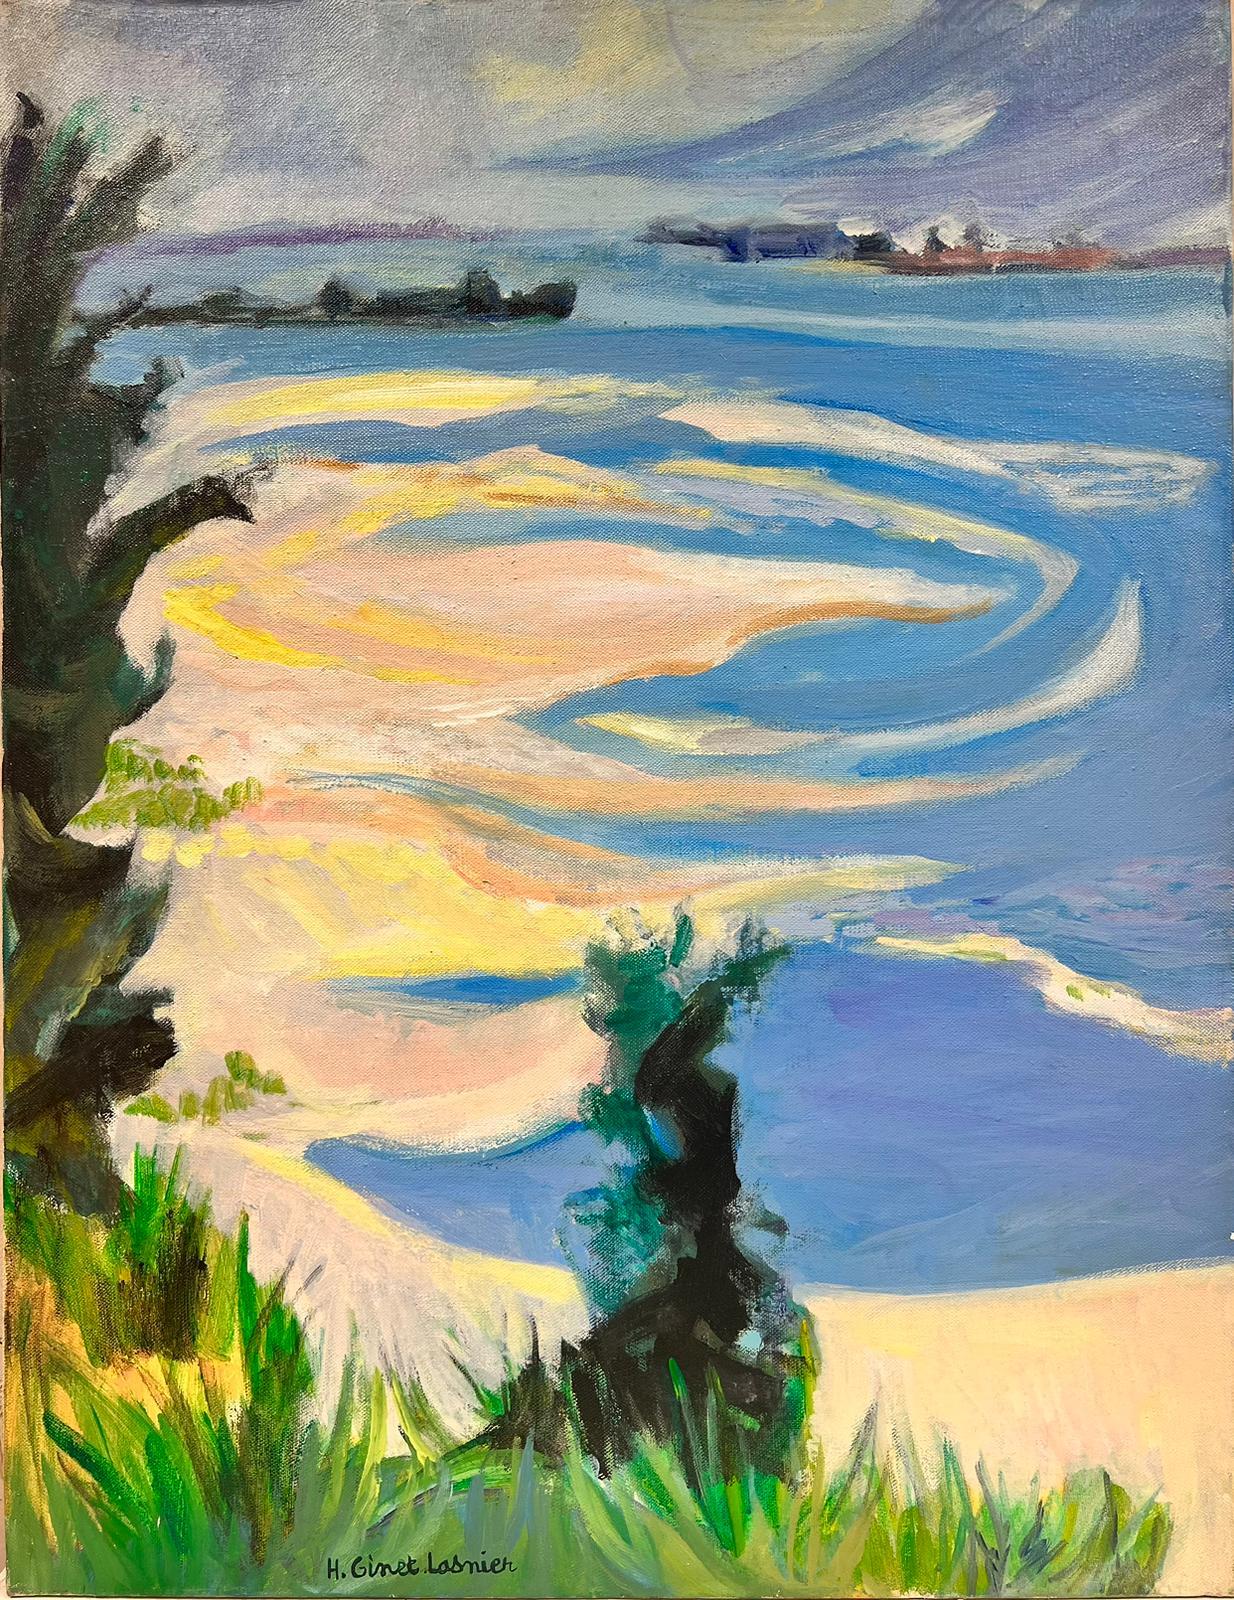 Huguette Ginet-Lasnier  Landscape Painting - French Contemporary Modernist Oil Beautiful Coastal Inlet Sandy Beach